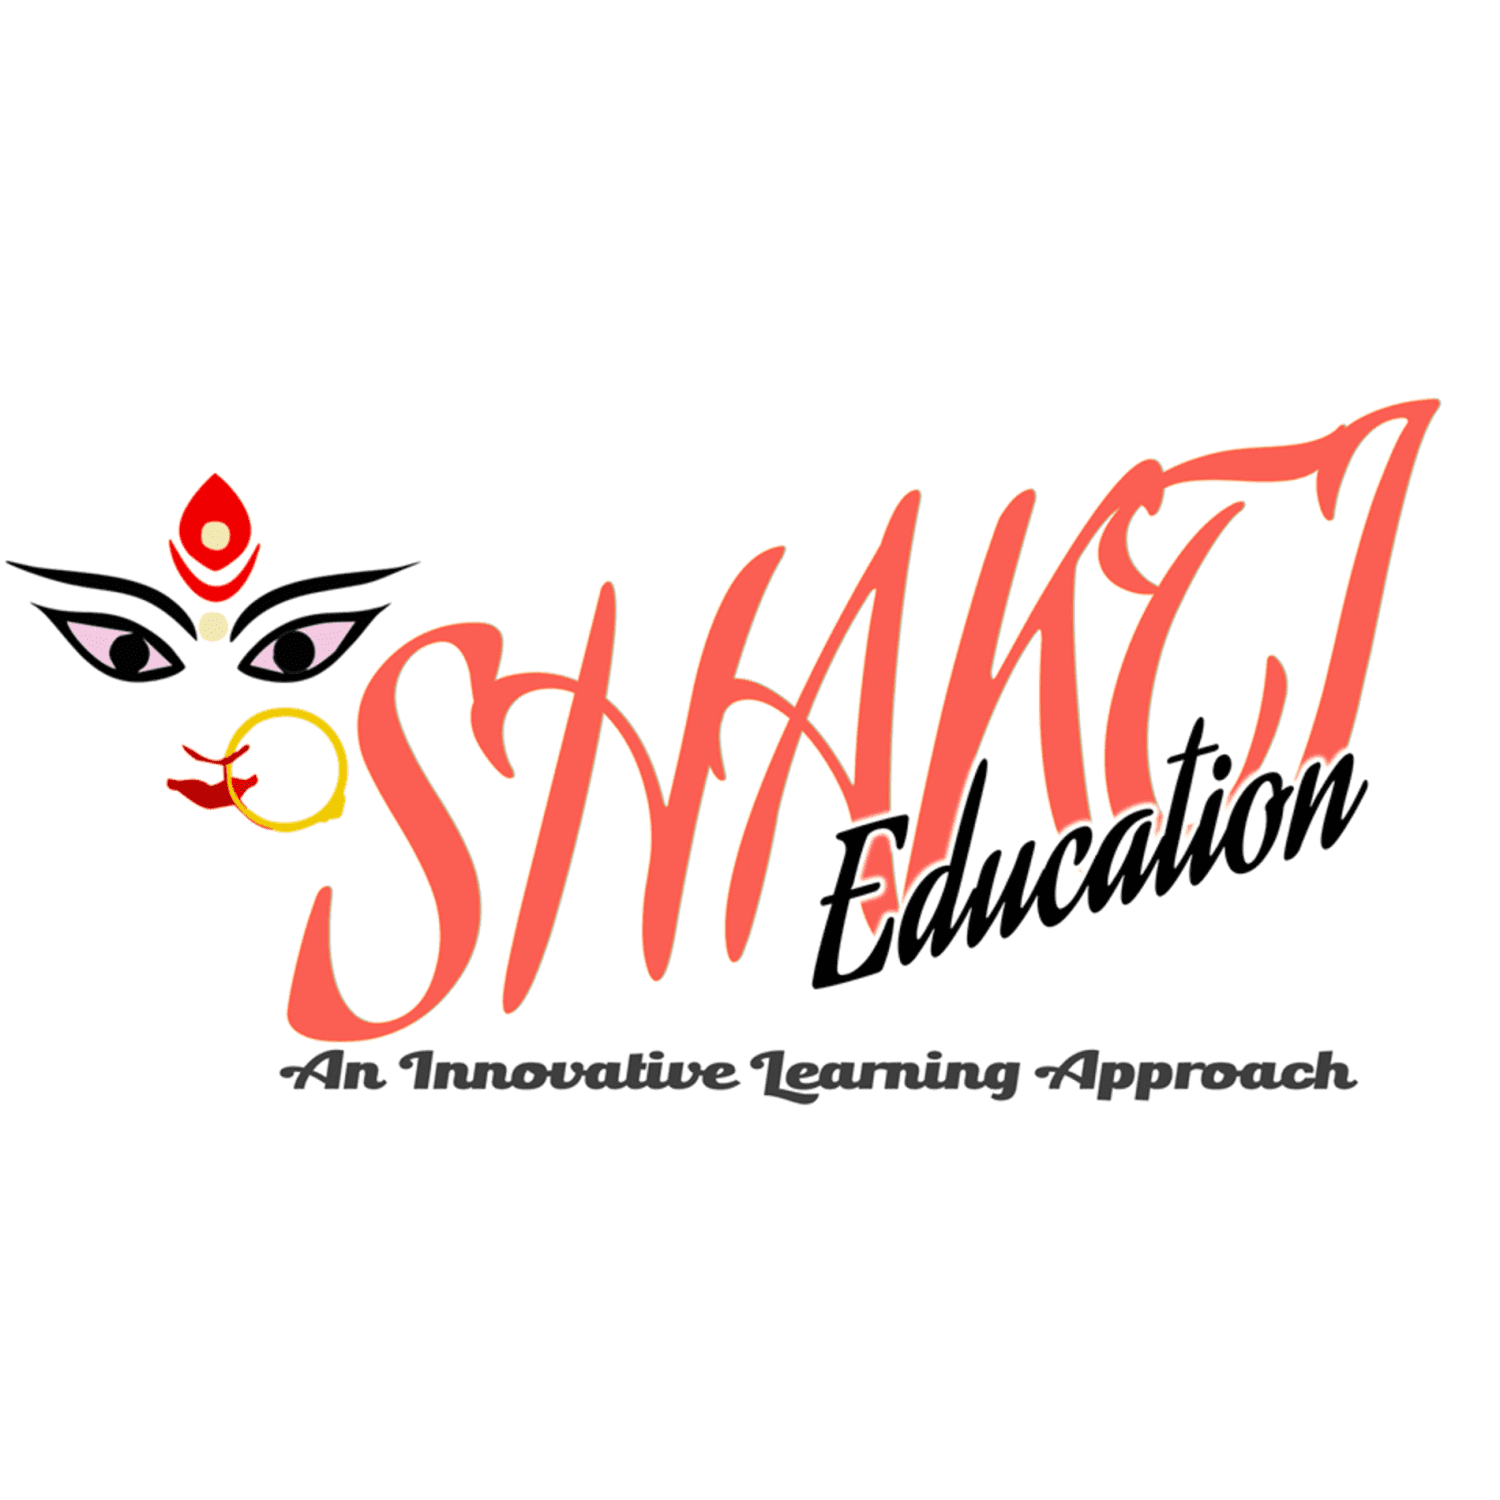 Shakti Education